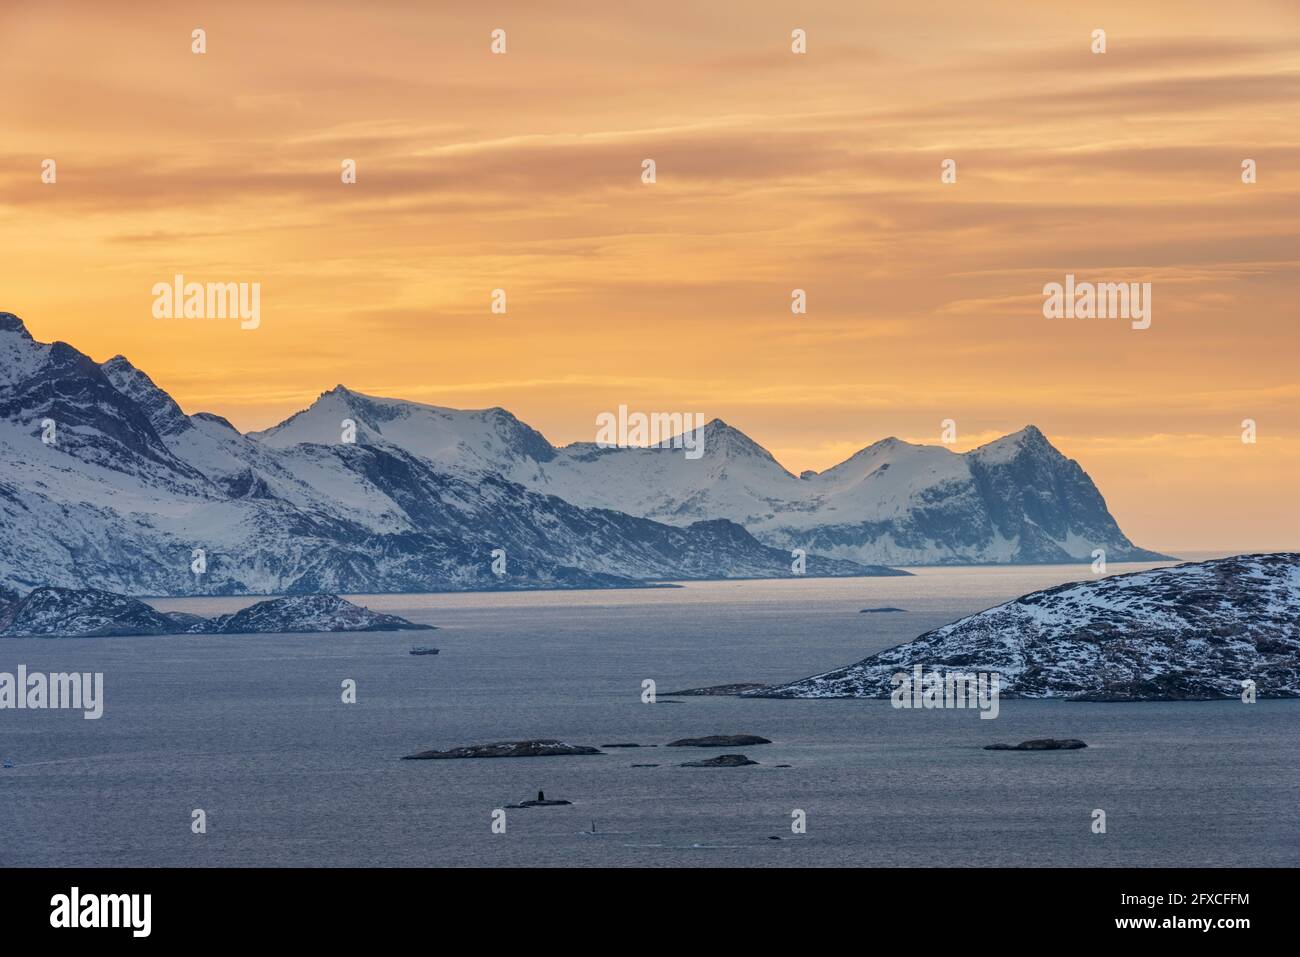 Norvegia, Tromso, Kvaloya, cielo spettacolare sulla montagna nevosa Isola di Senja visto dall'Isola di Kvaloya al tramonto Foto Stock